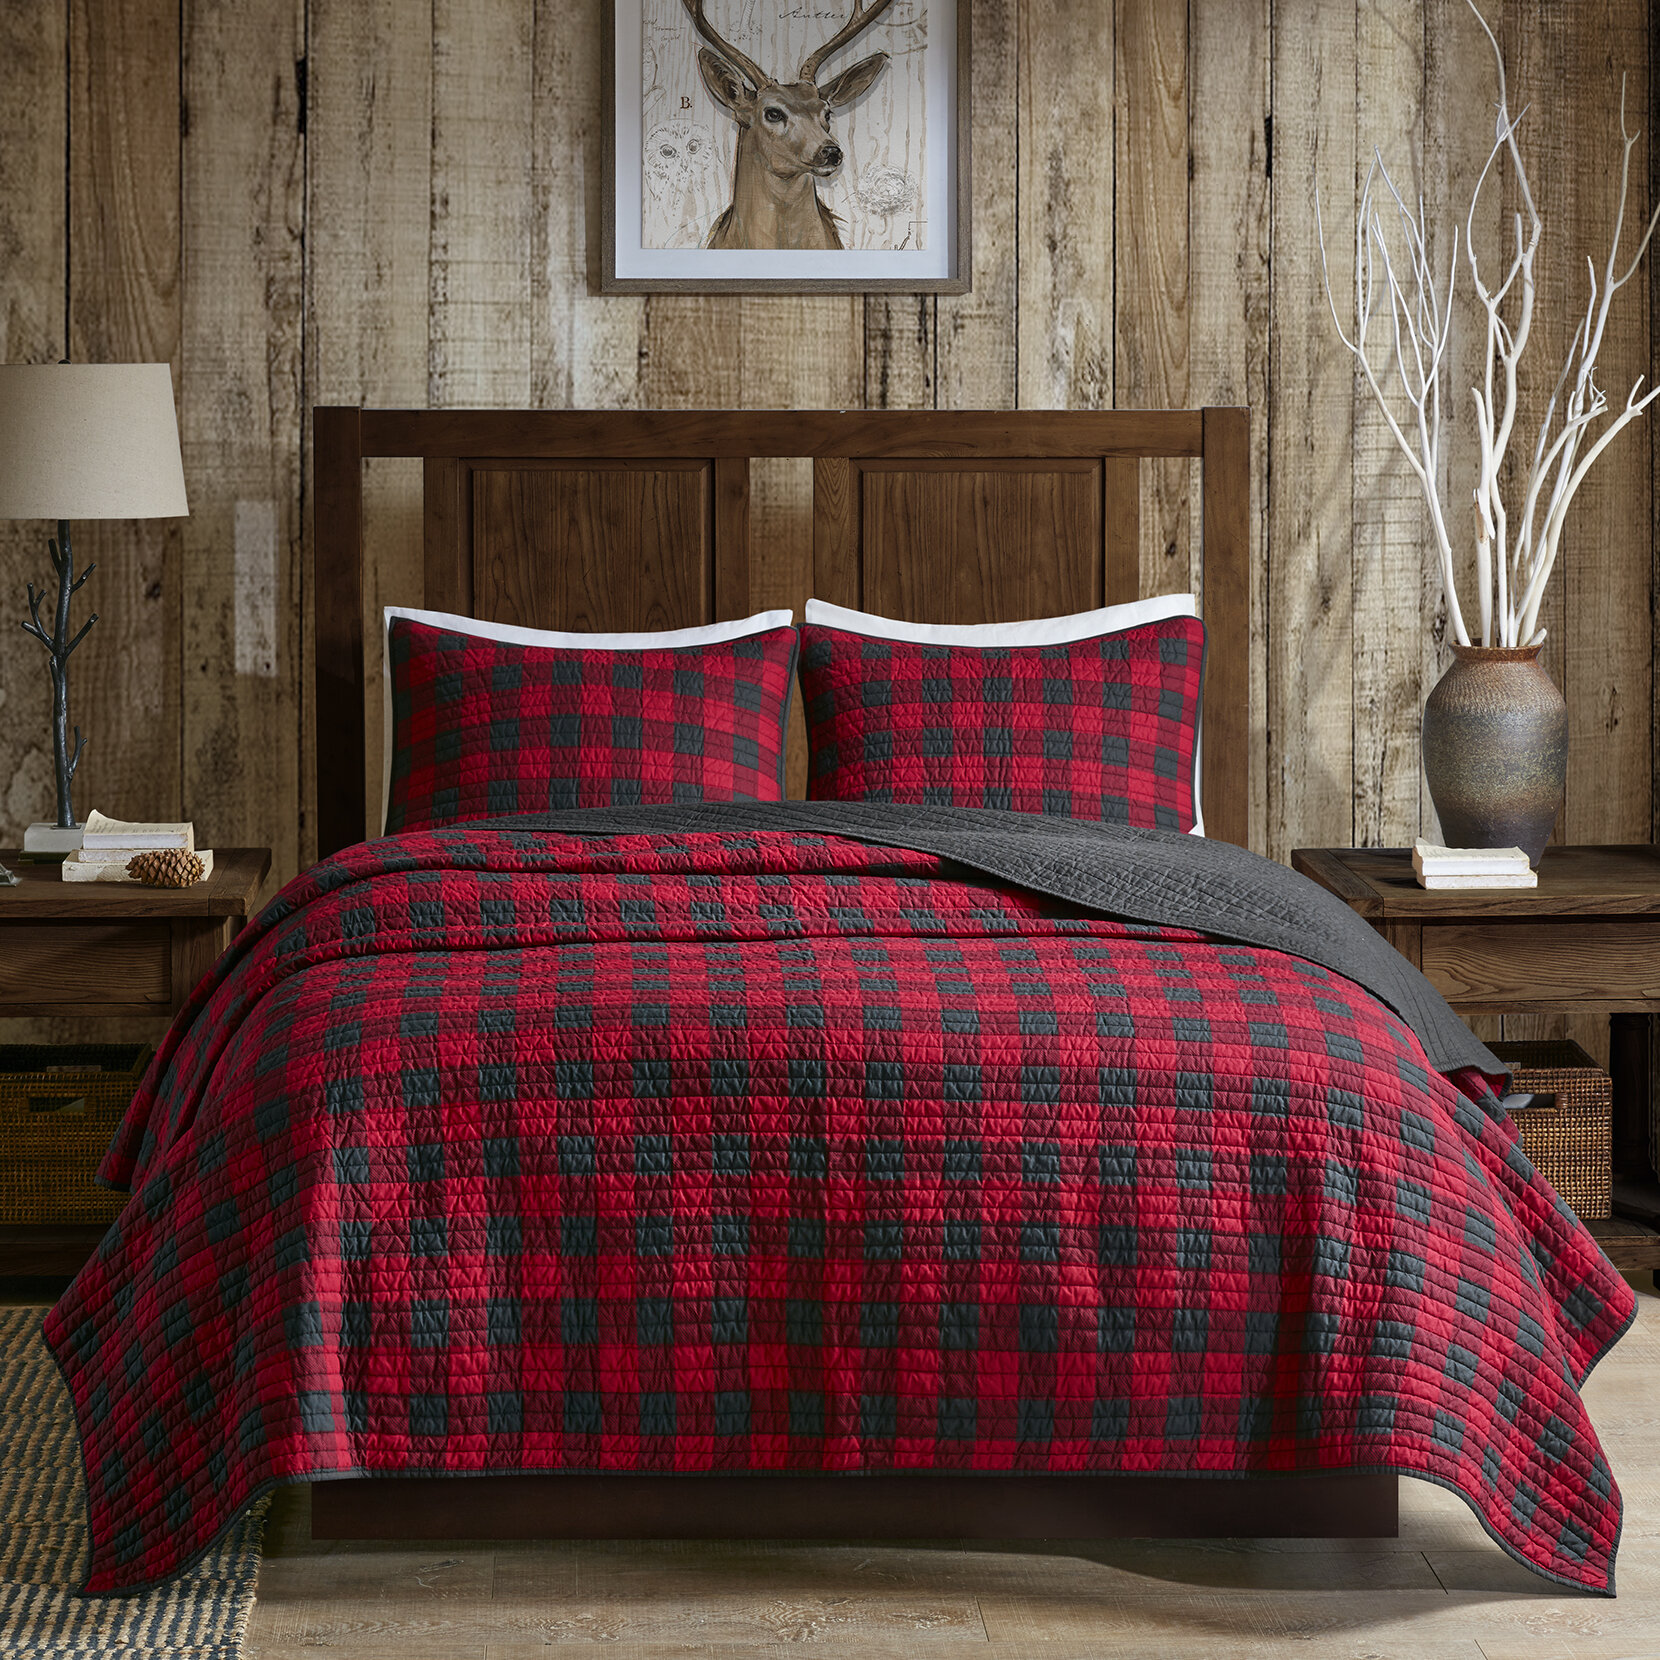 Lightweight Bed Quilt Classical Pattern Comforter Bedspread Coverlet Blanket 